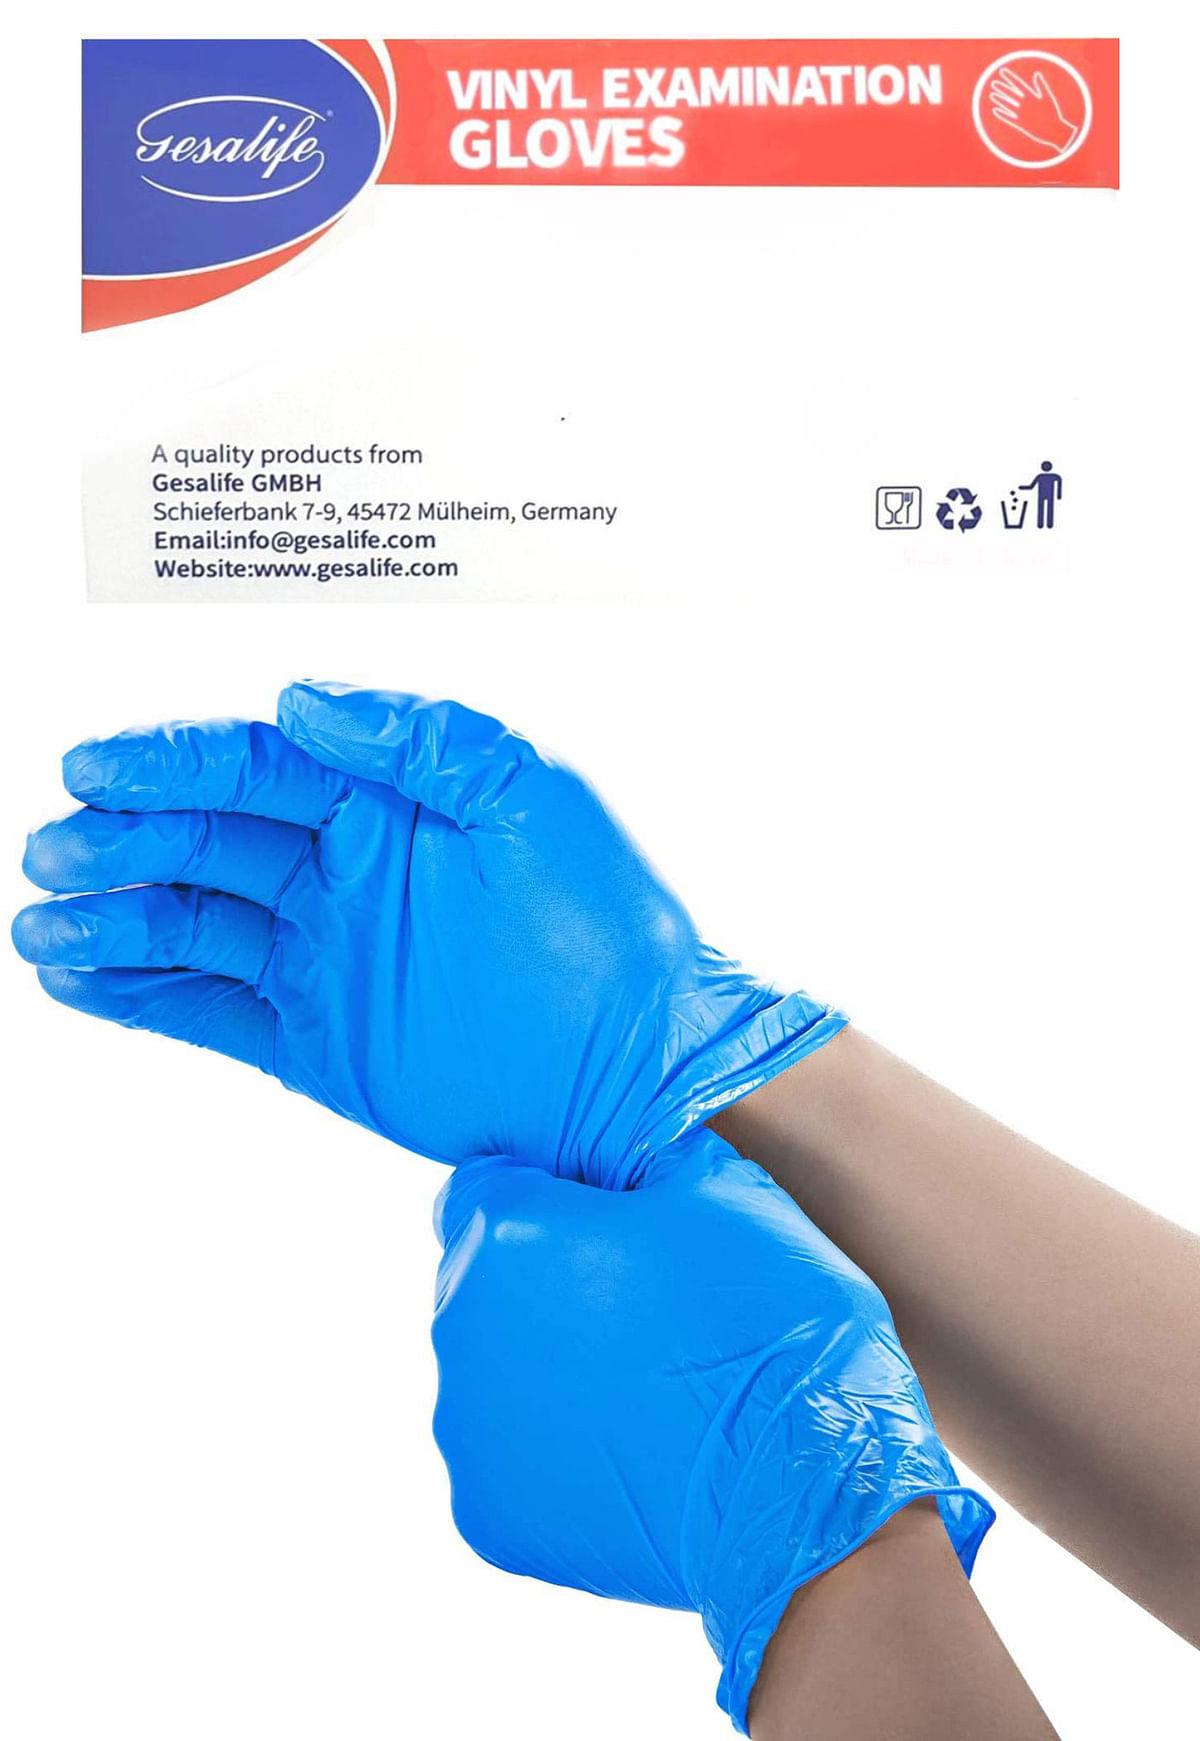 Powder Free Vinyl Disposable Blue Gloves 100 Pcs